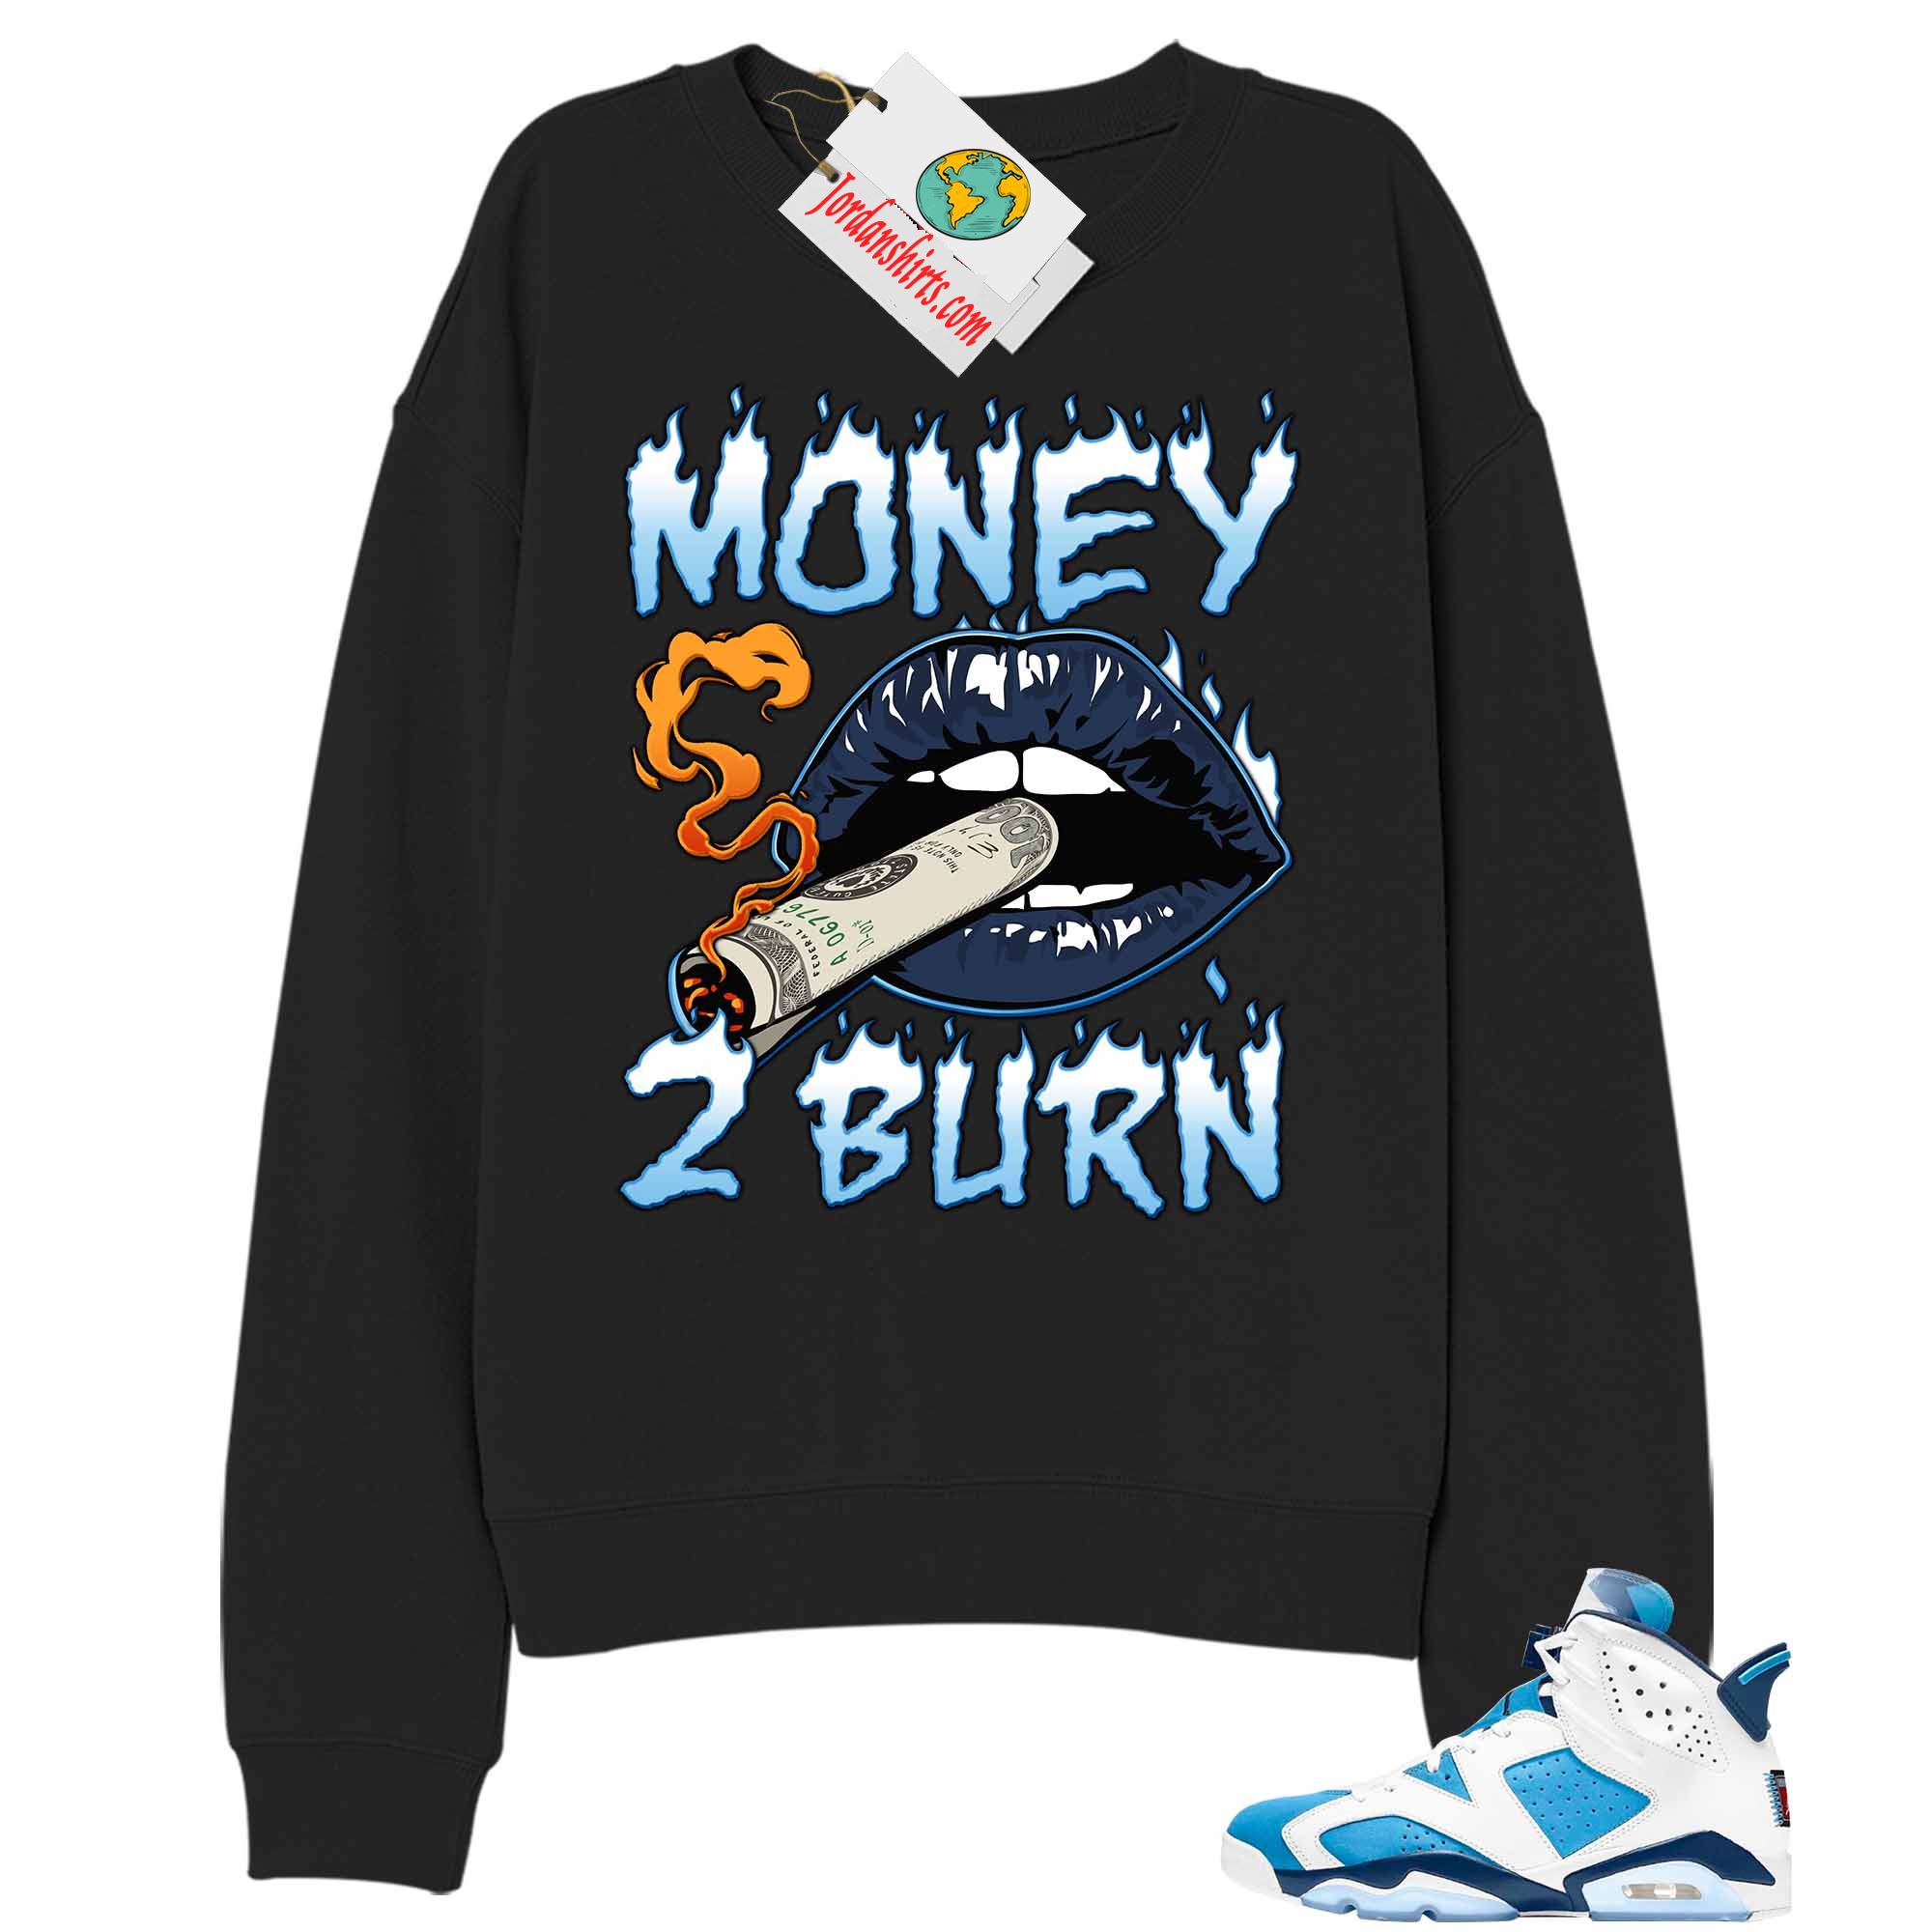 Jordan 6 Sweatshirt, Money To Burn Black Sweatshirt Air Jordan 6 Unc 6s Size Up To 5xl